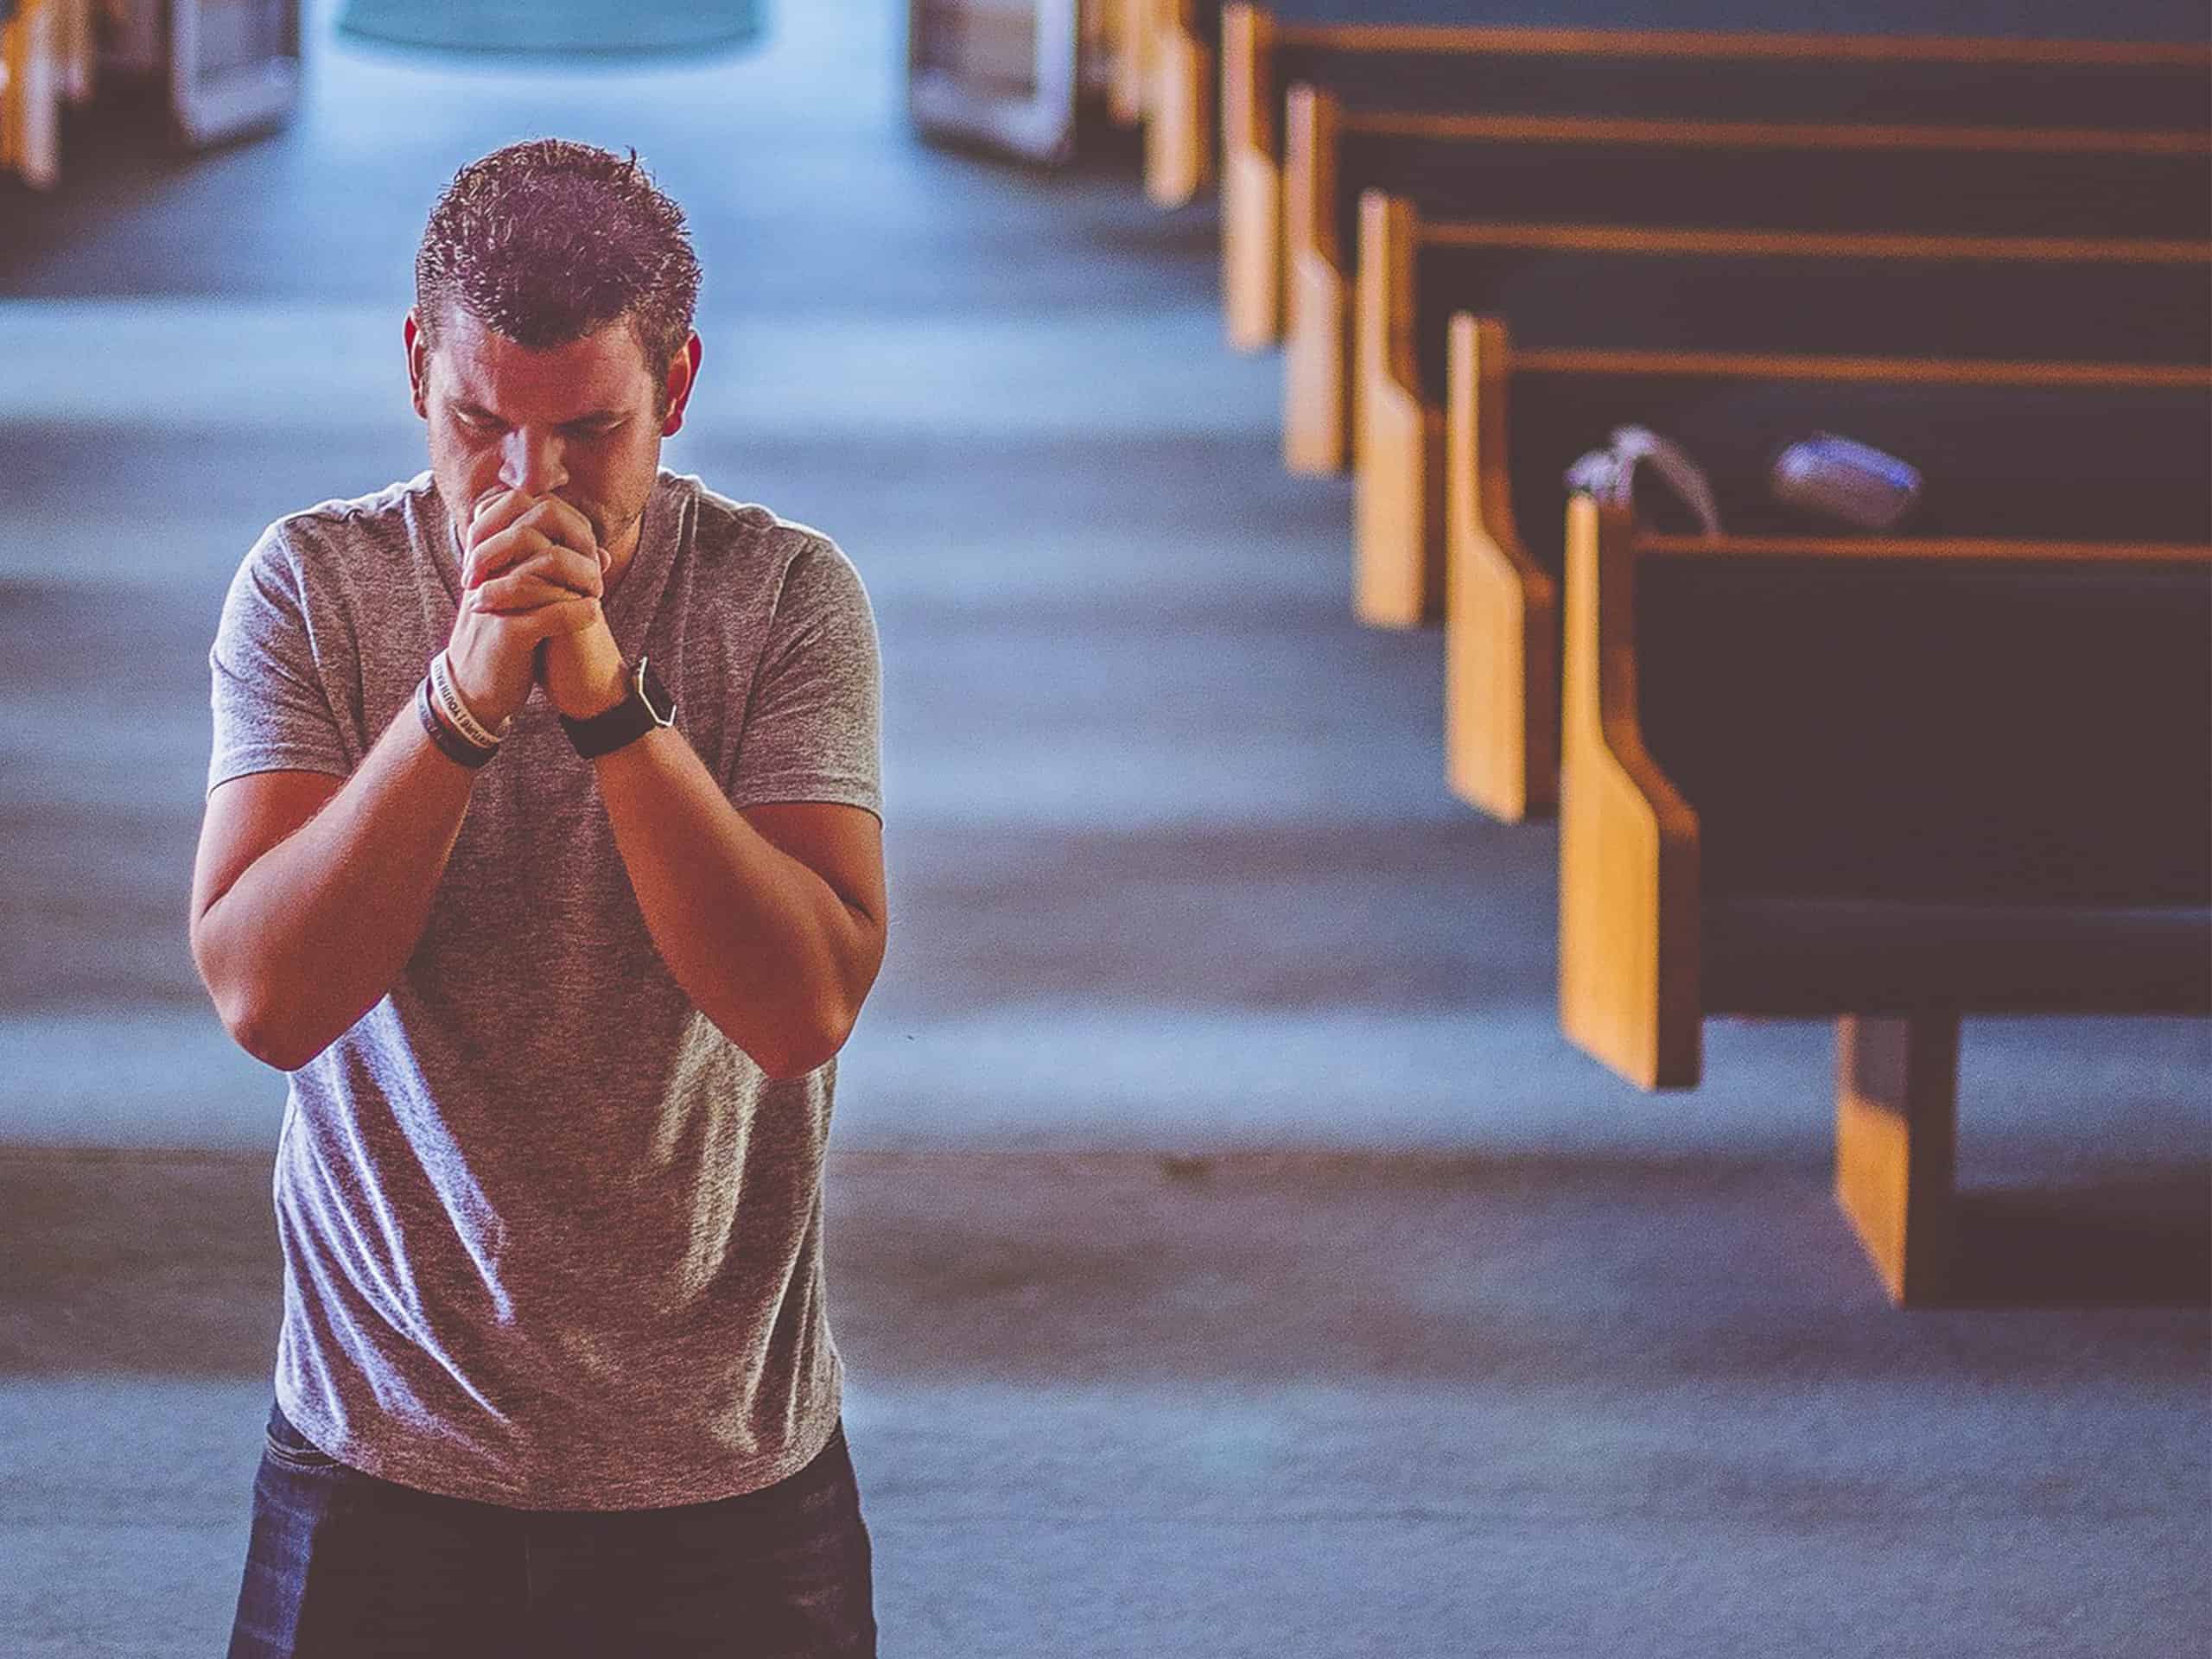 How a Targeted Messaging Platform Can Help Grow Your Church